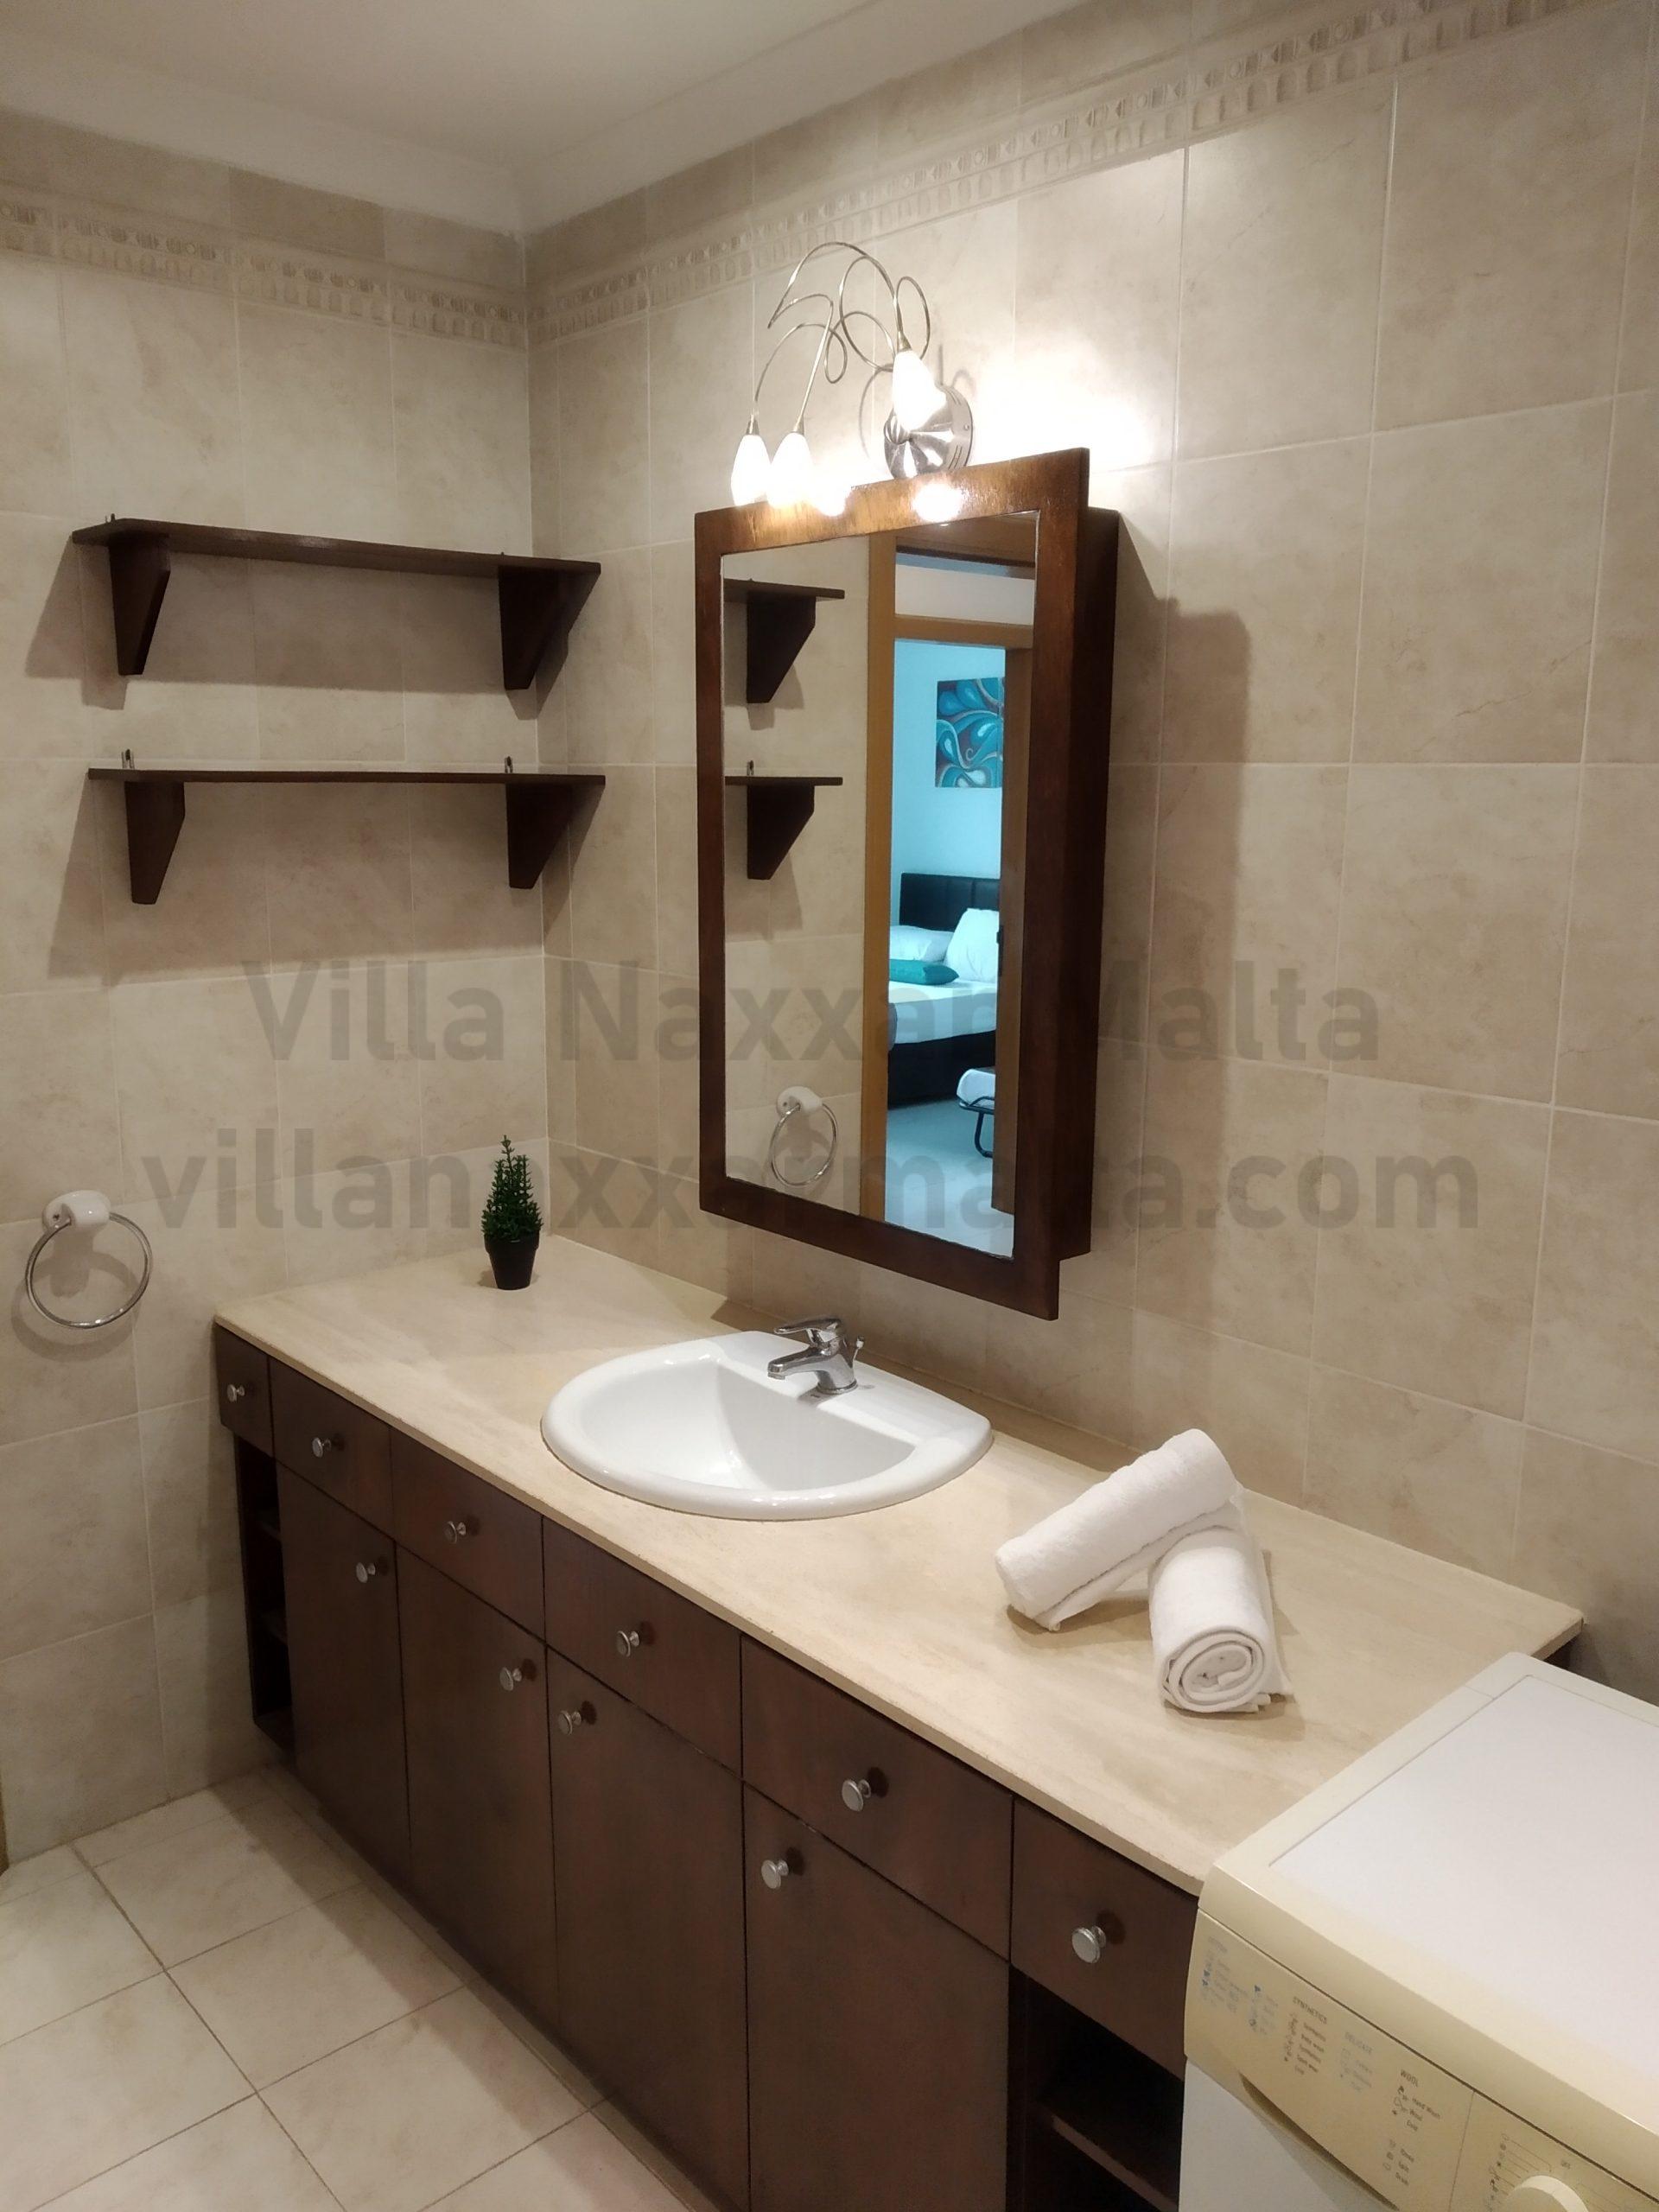 Villa Naxxar Malta – Shower with bide’ and more